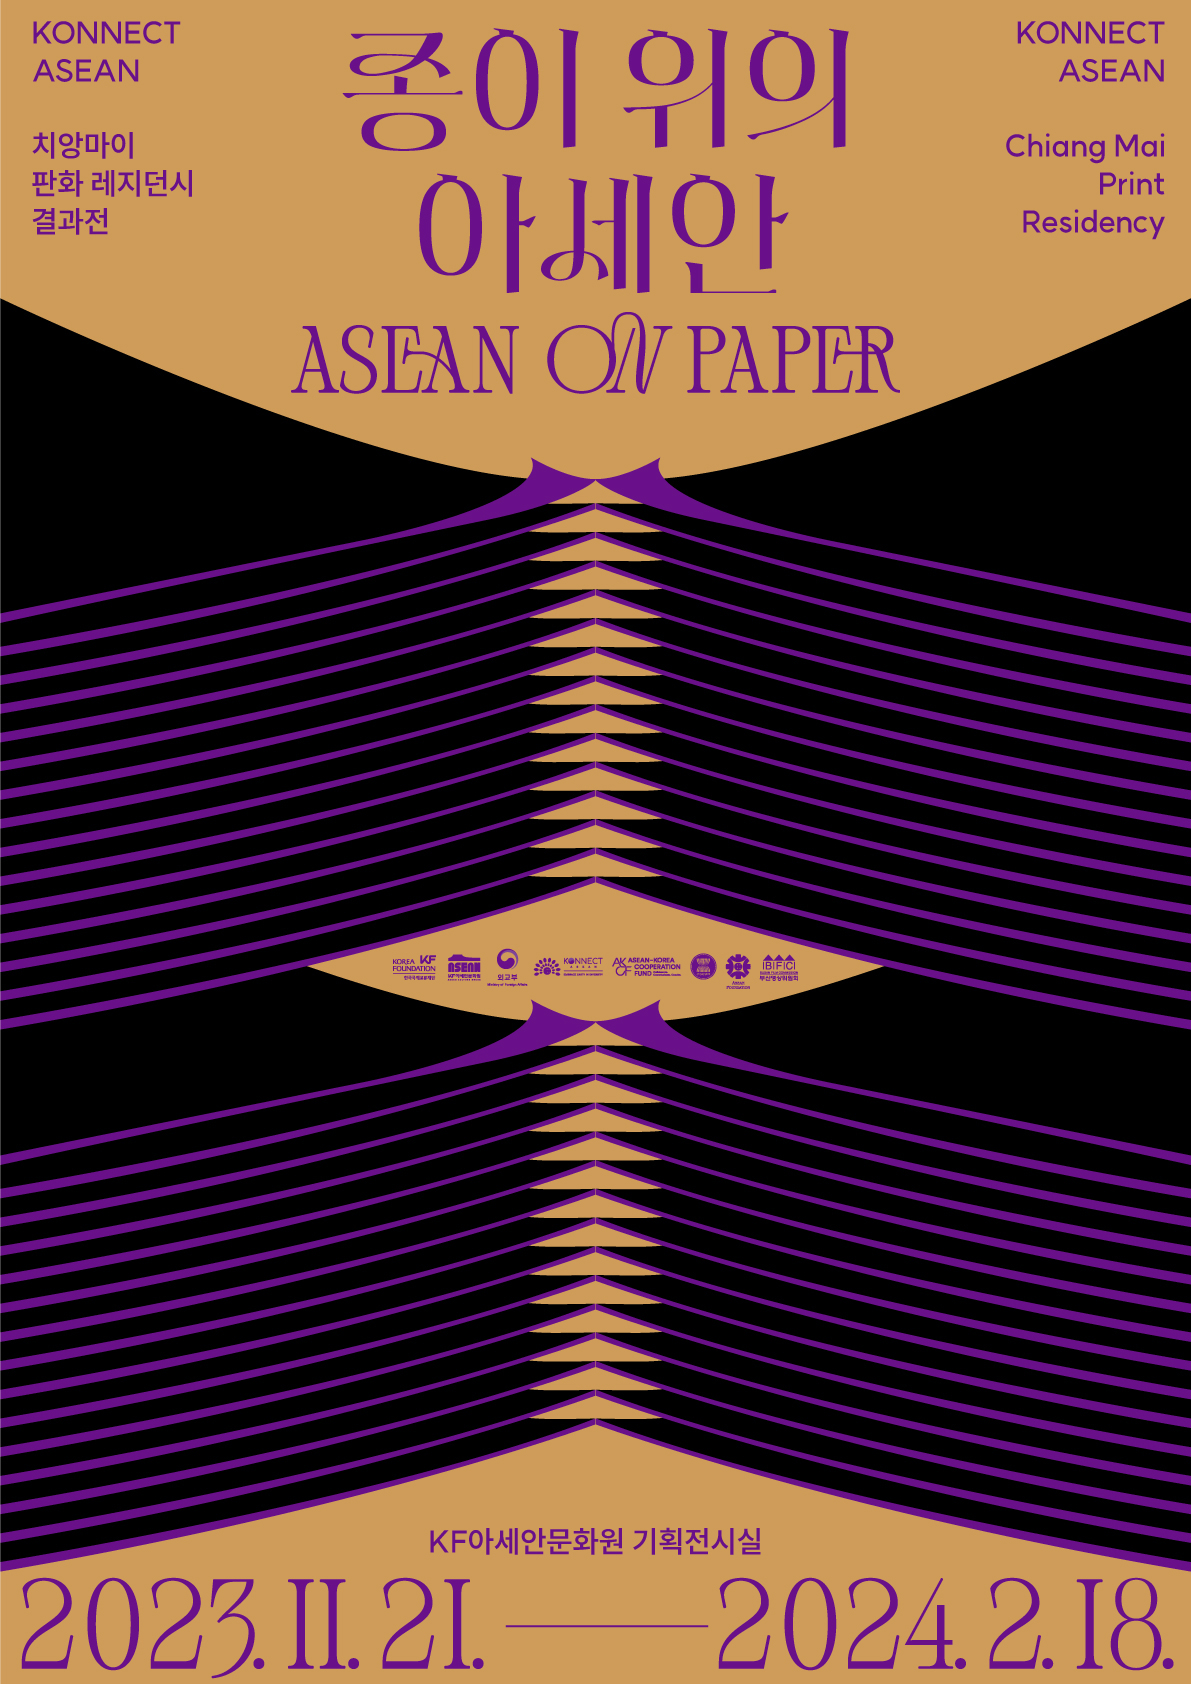 ASEAN on Paper : KONNECT ASEAN Chiang Mai Print Residency